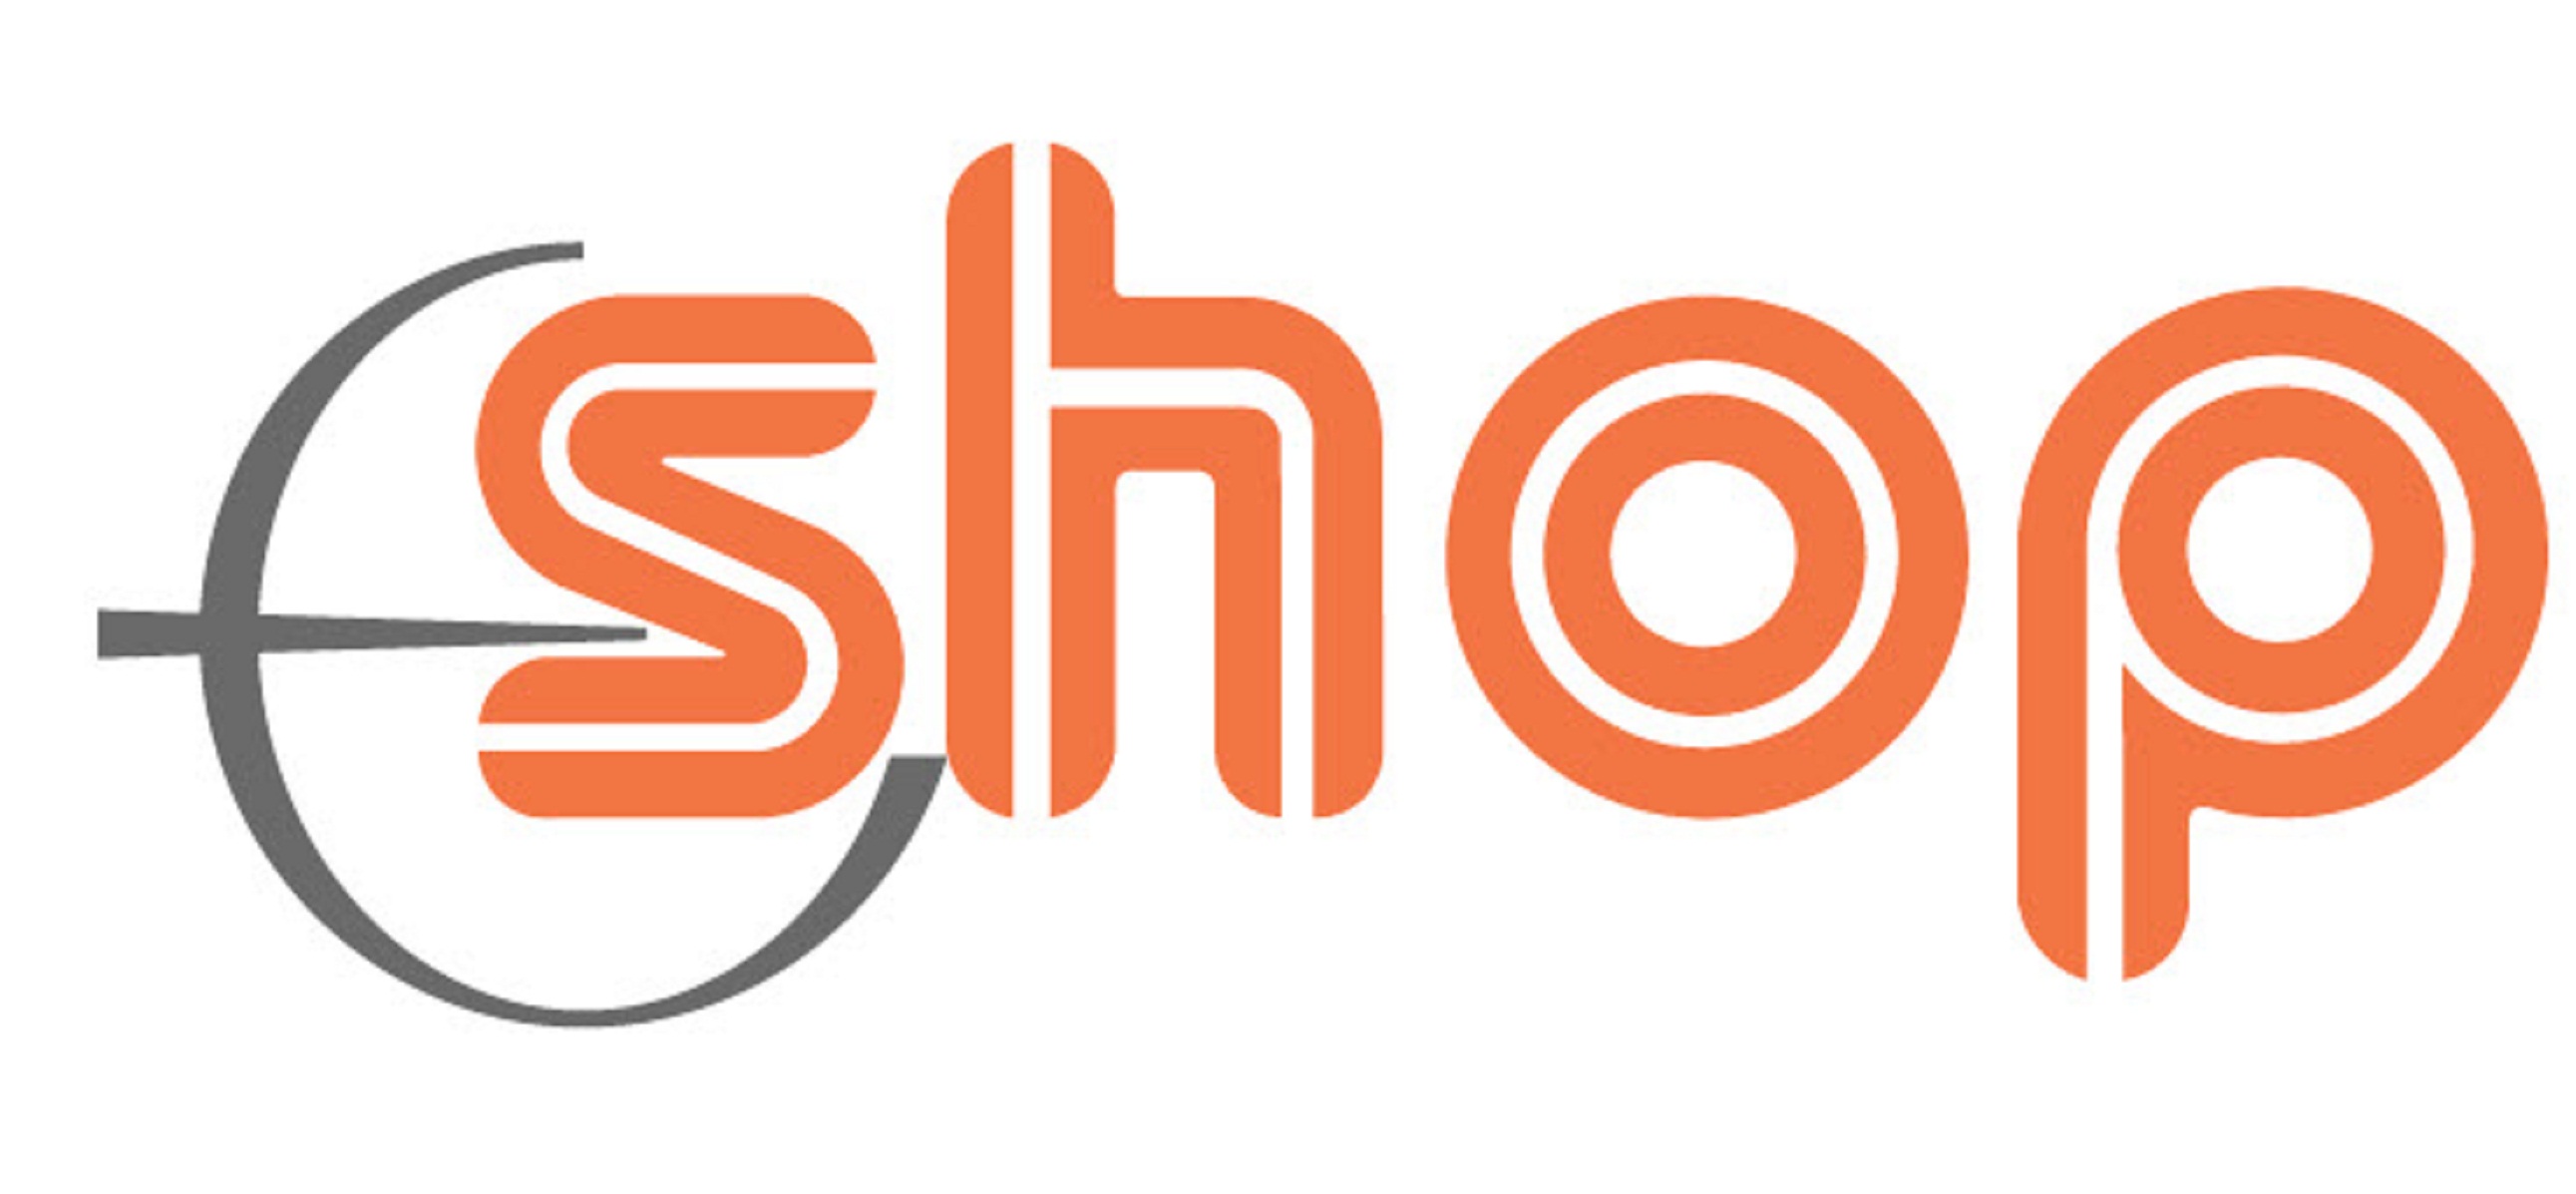 Logos shop ru. Логотип магазина. Интернет магазин лого. Логотип шоп. Логотип интернетного магазина.